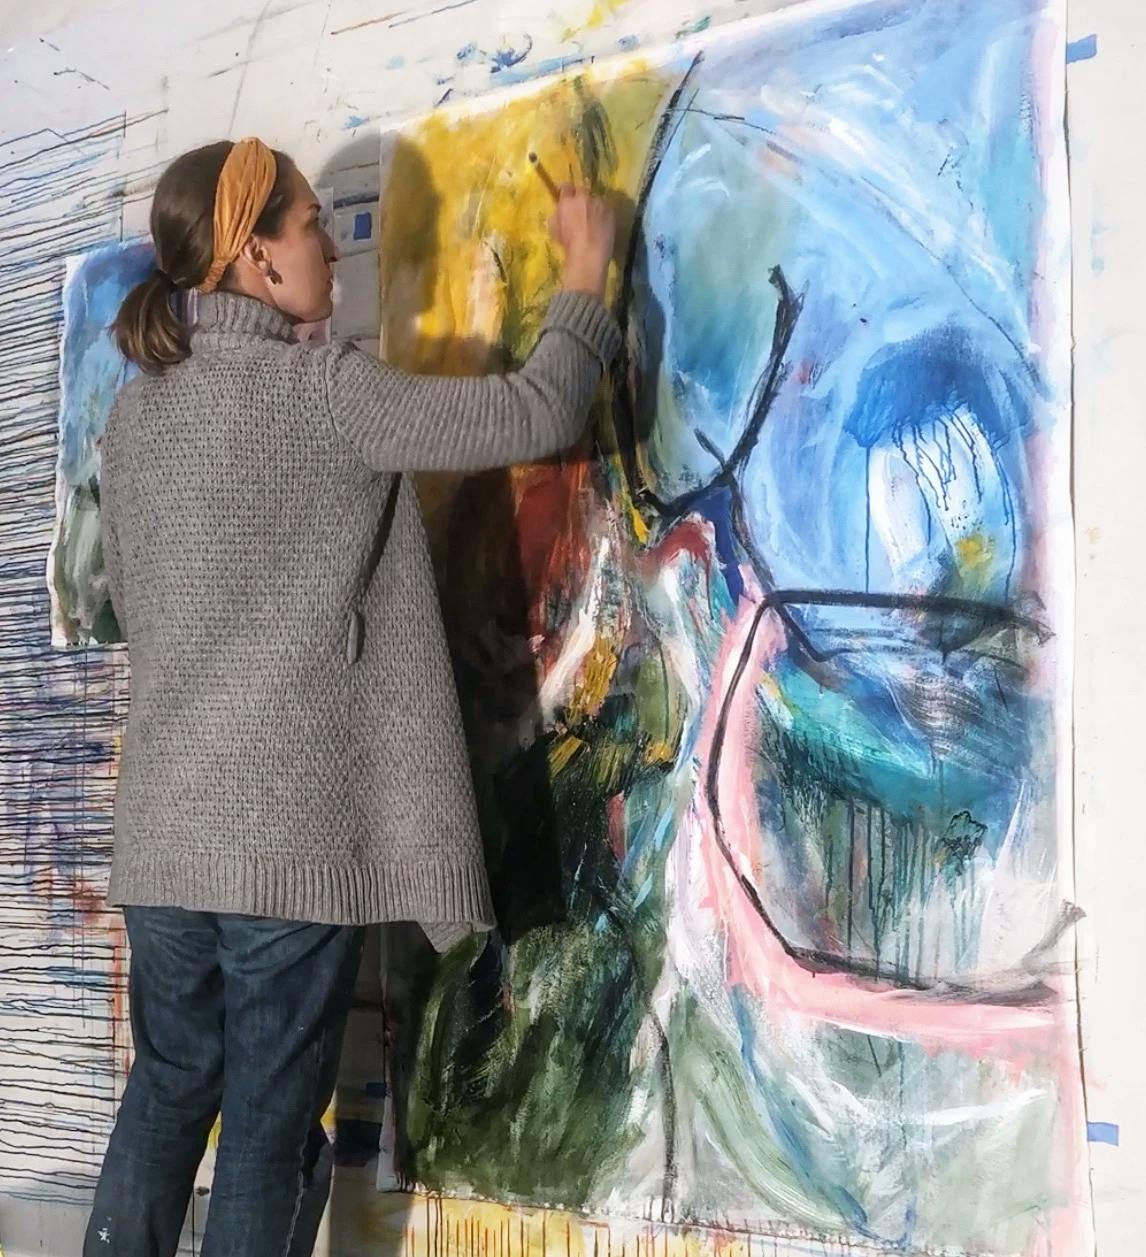 Artist Elisa Gomez standing and painting a large, gestural work in her studio.